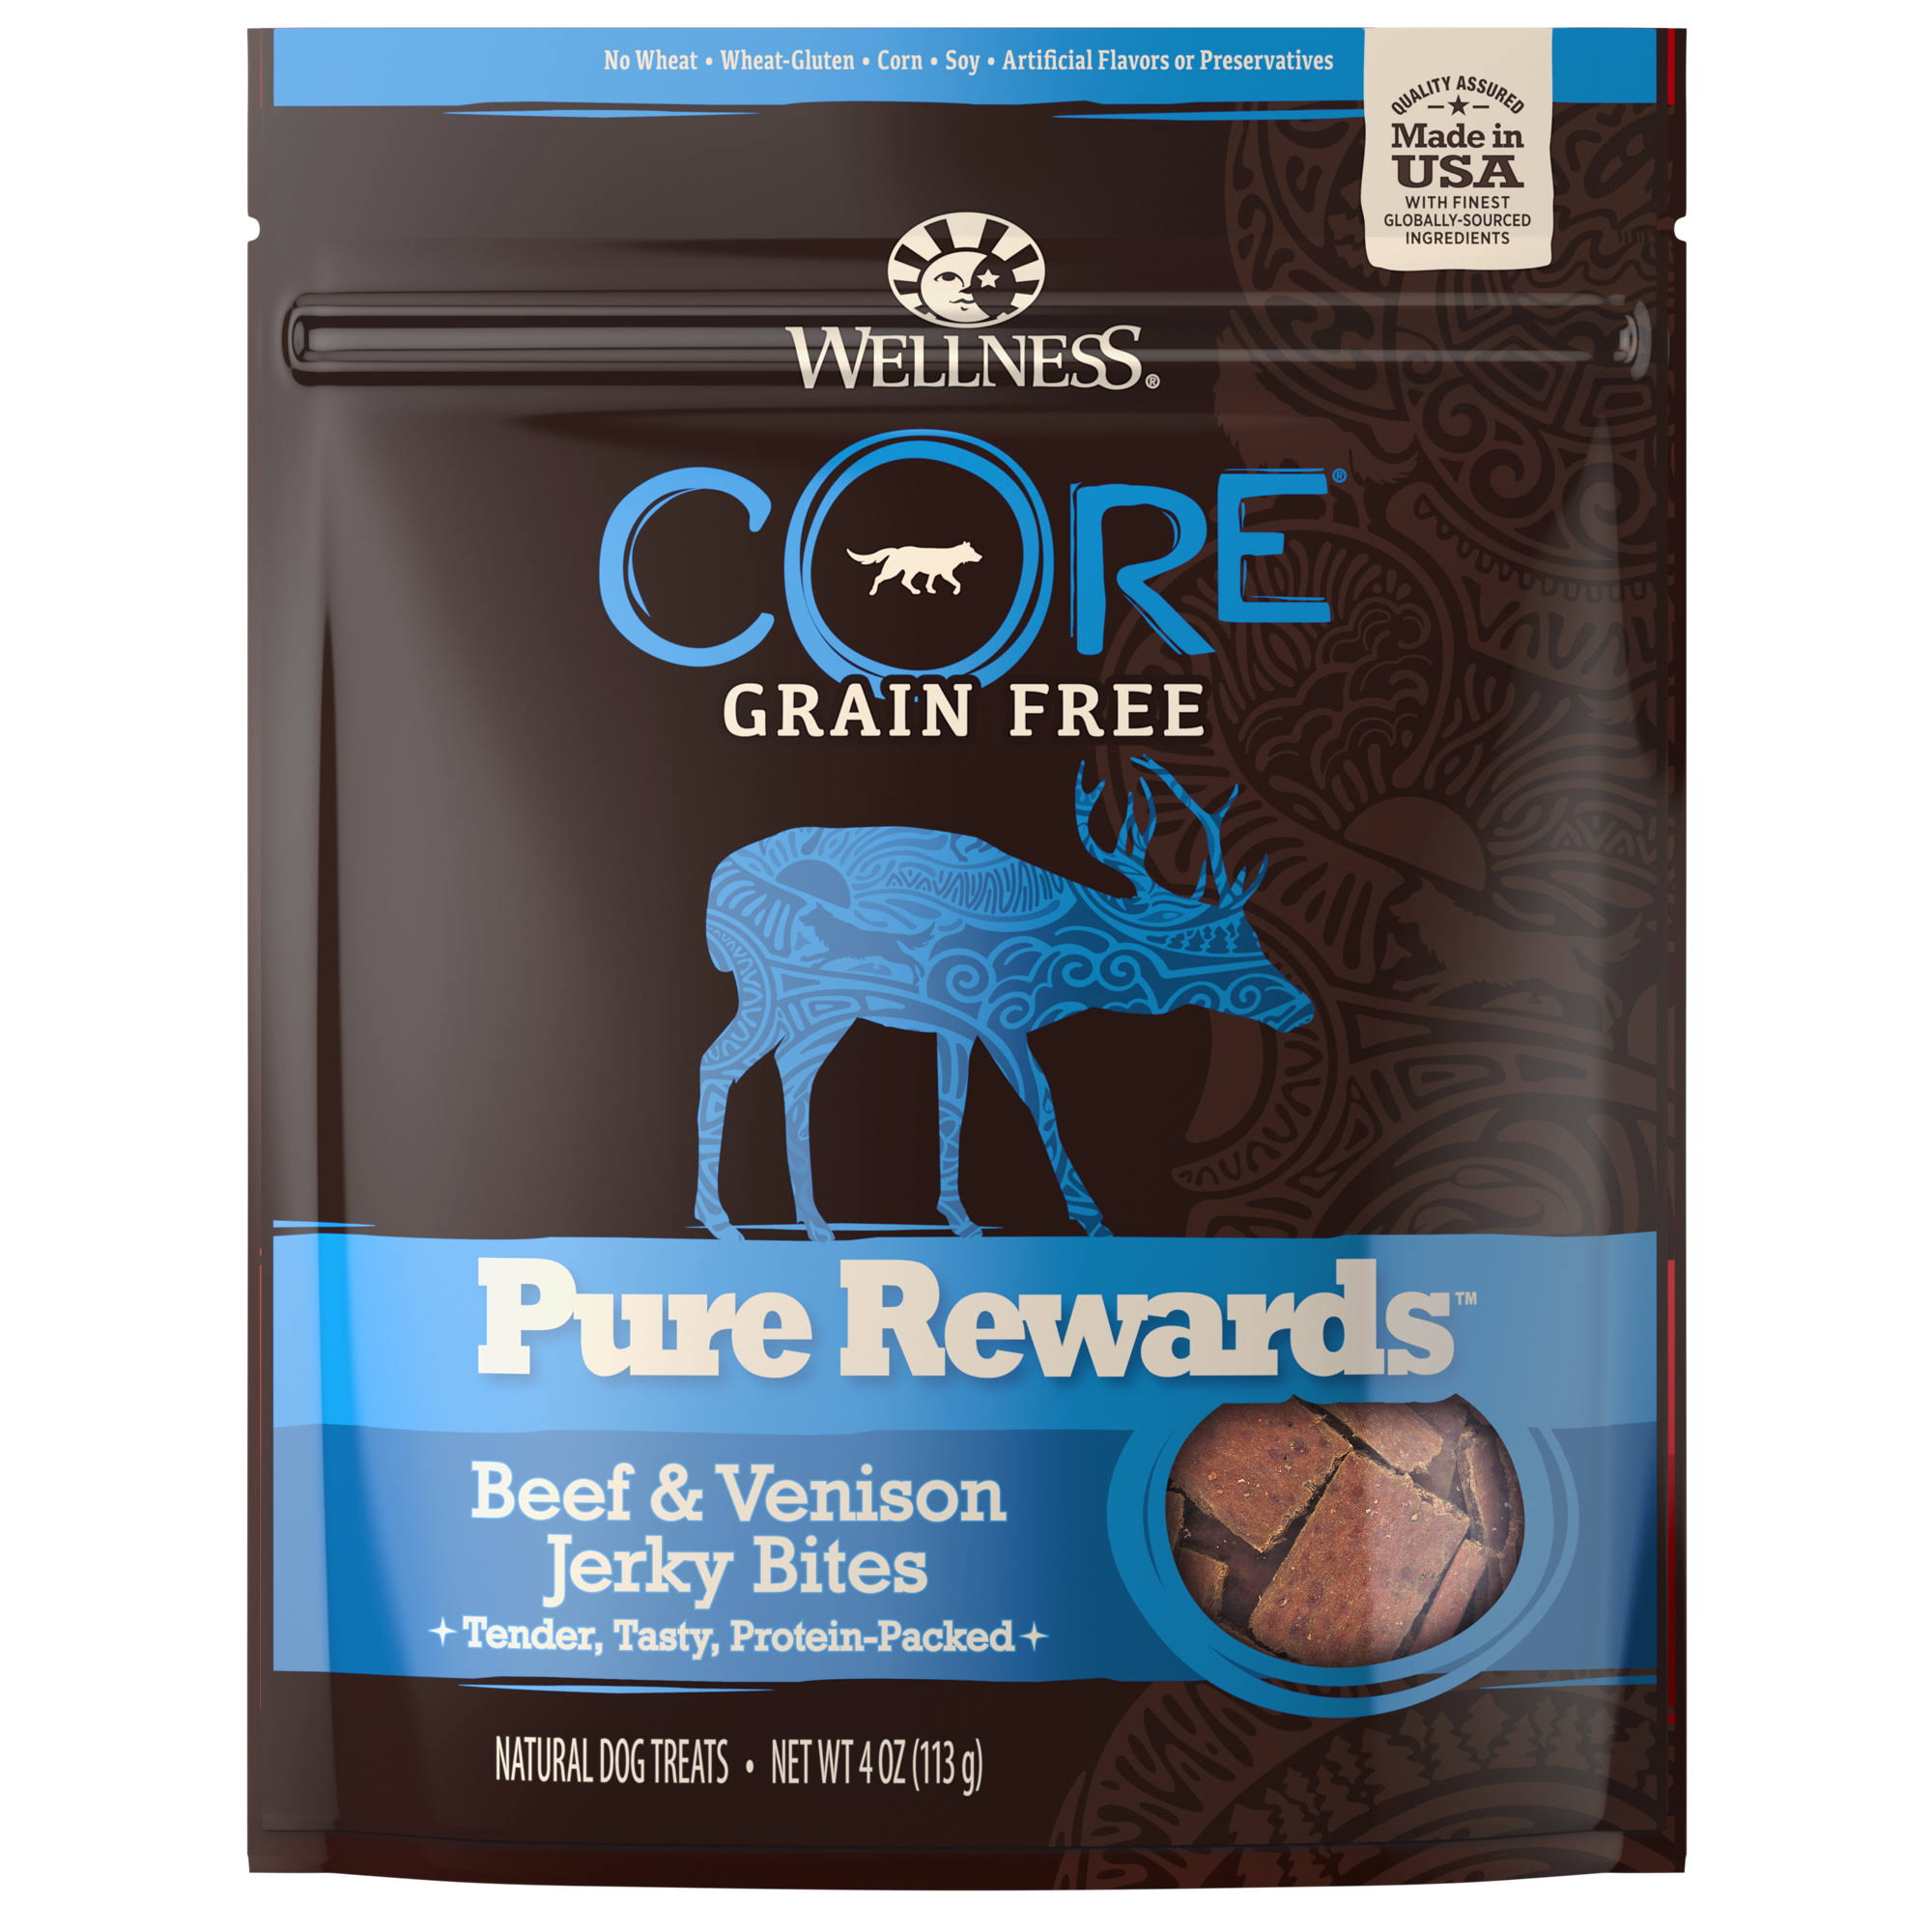 Wellness Core Pure Rewards Natural Grain Free Dog Treats - Beef and Venison Jerky Bites, 4oz